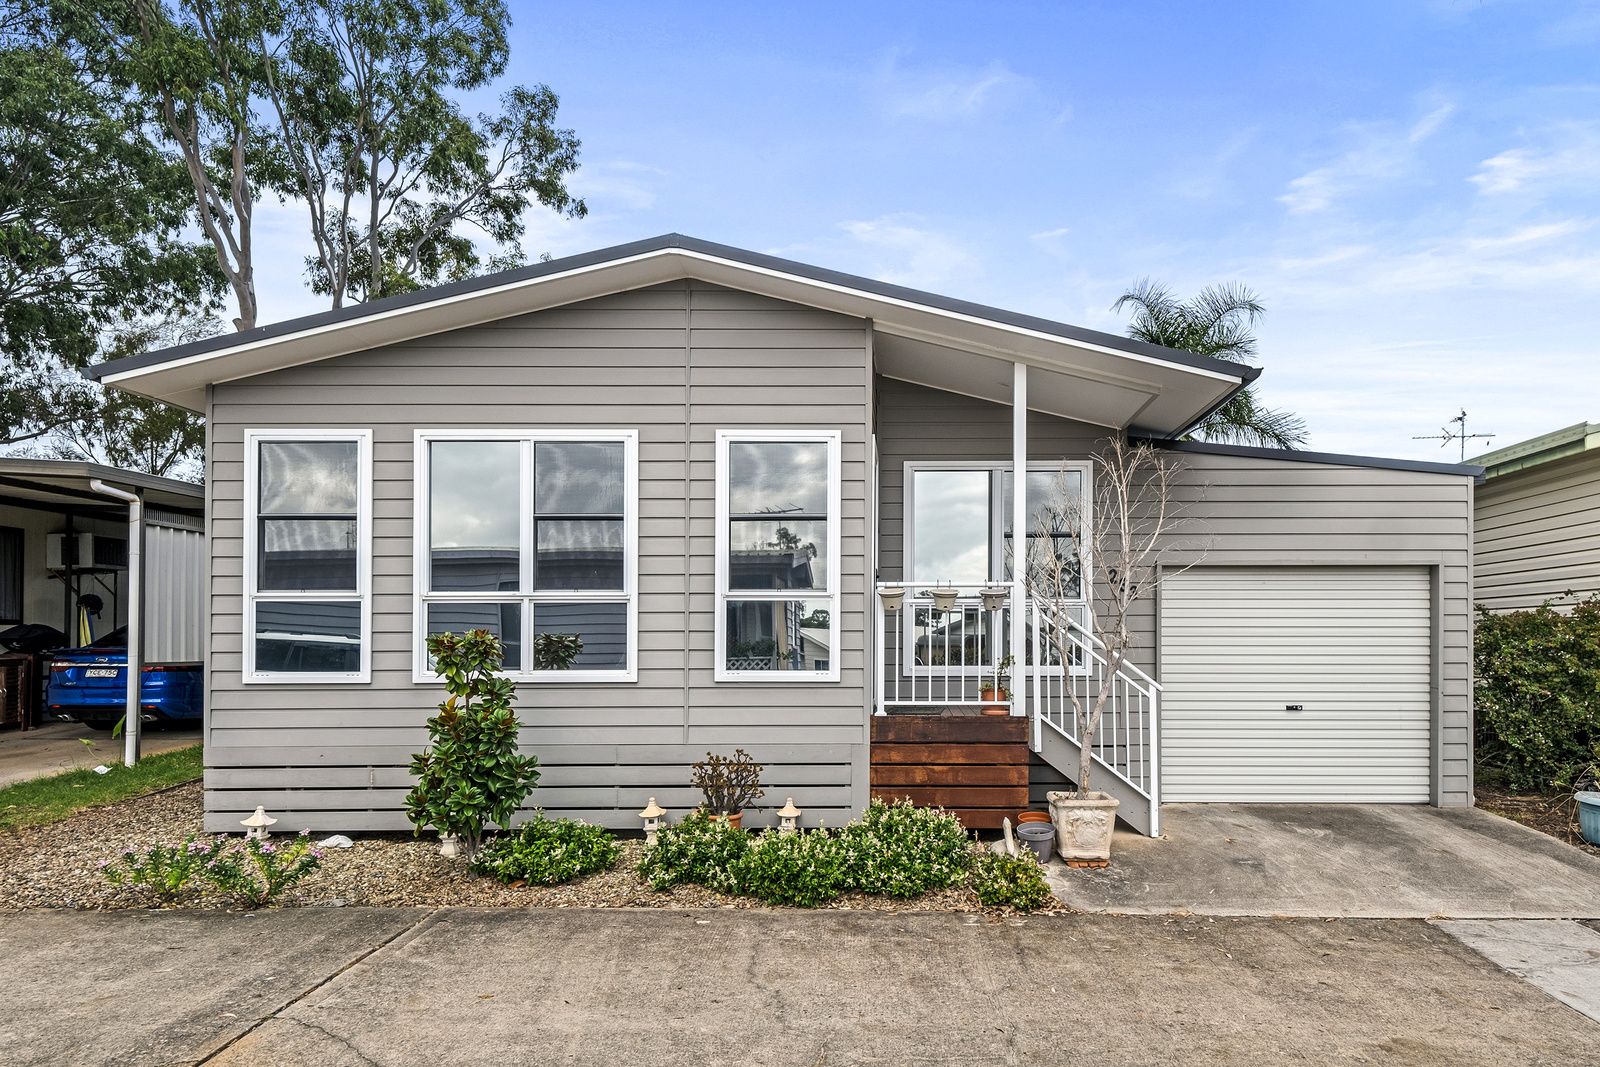 2 bedrooms House in 233/140 Hollinsworth Road MARSDEN PARK NSW, 2765